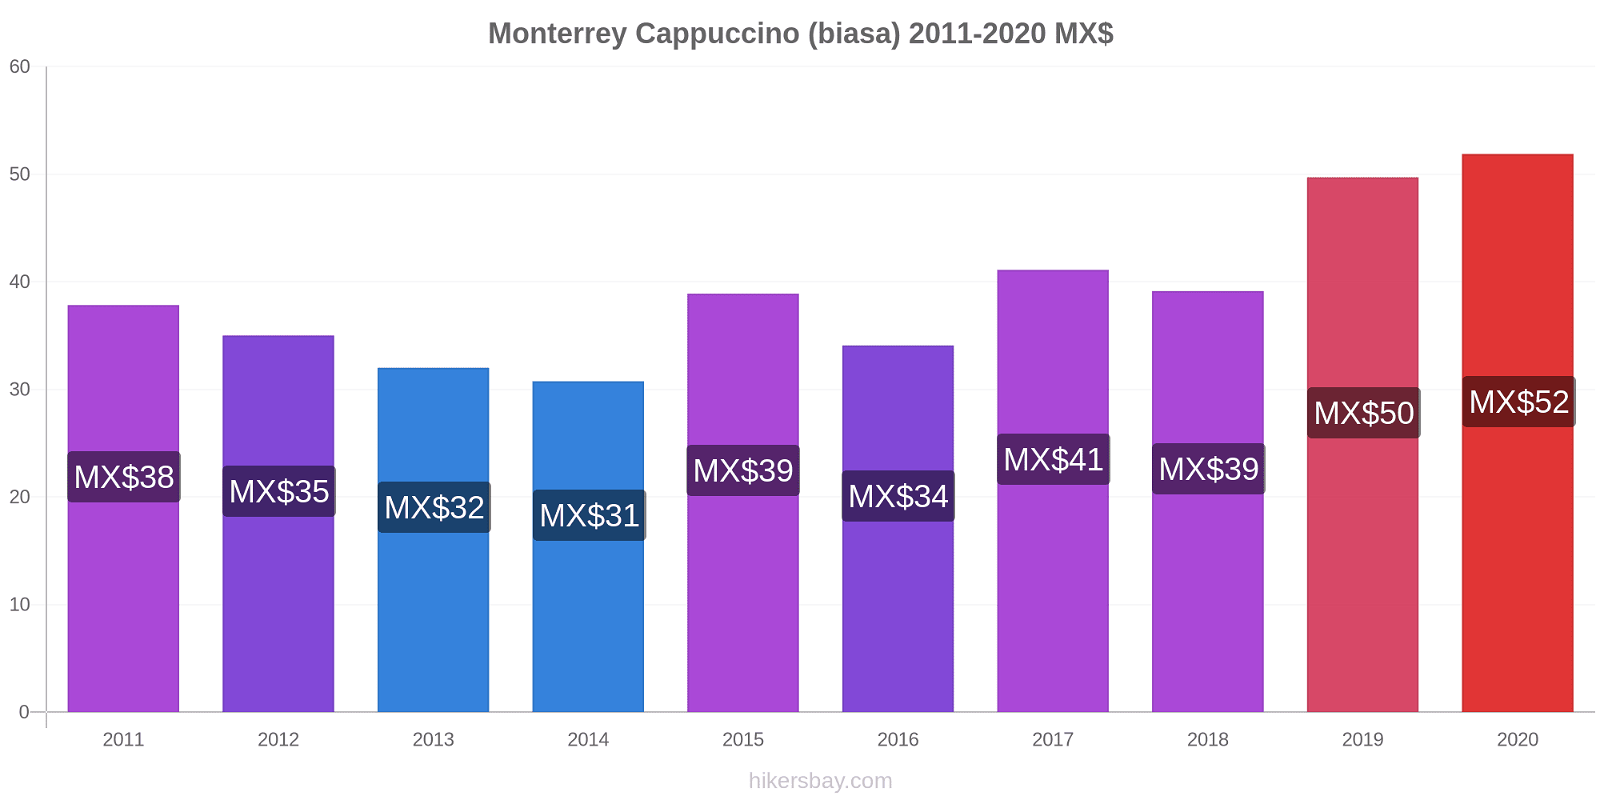 Monterrey perubahan harga Cappuccino (biasa) hikersbay.com